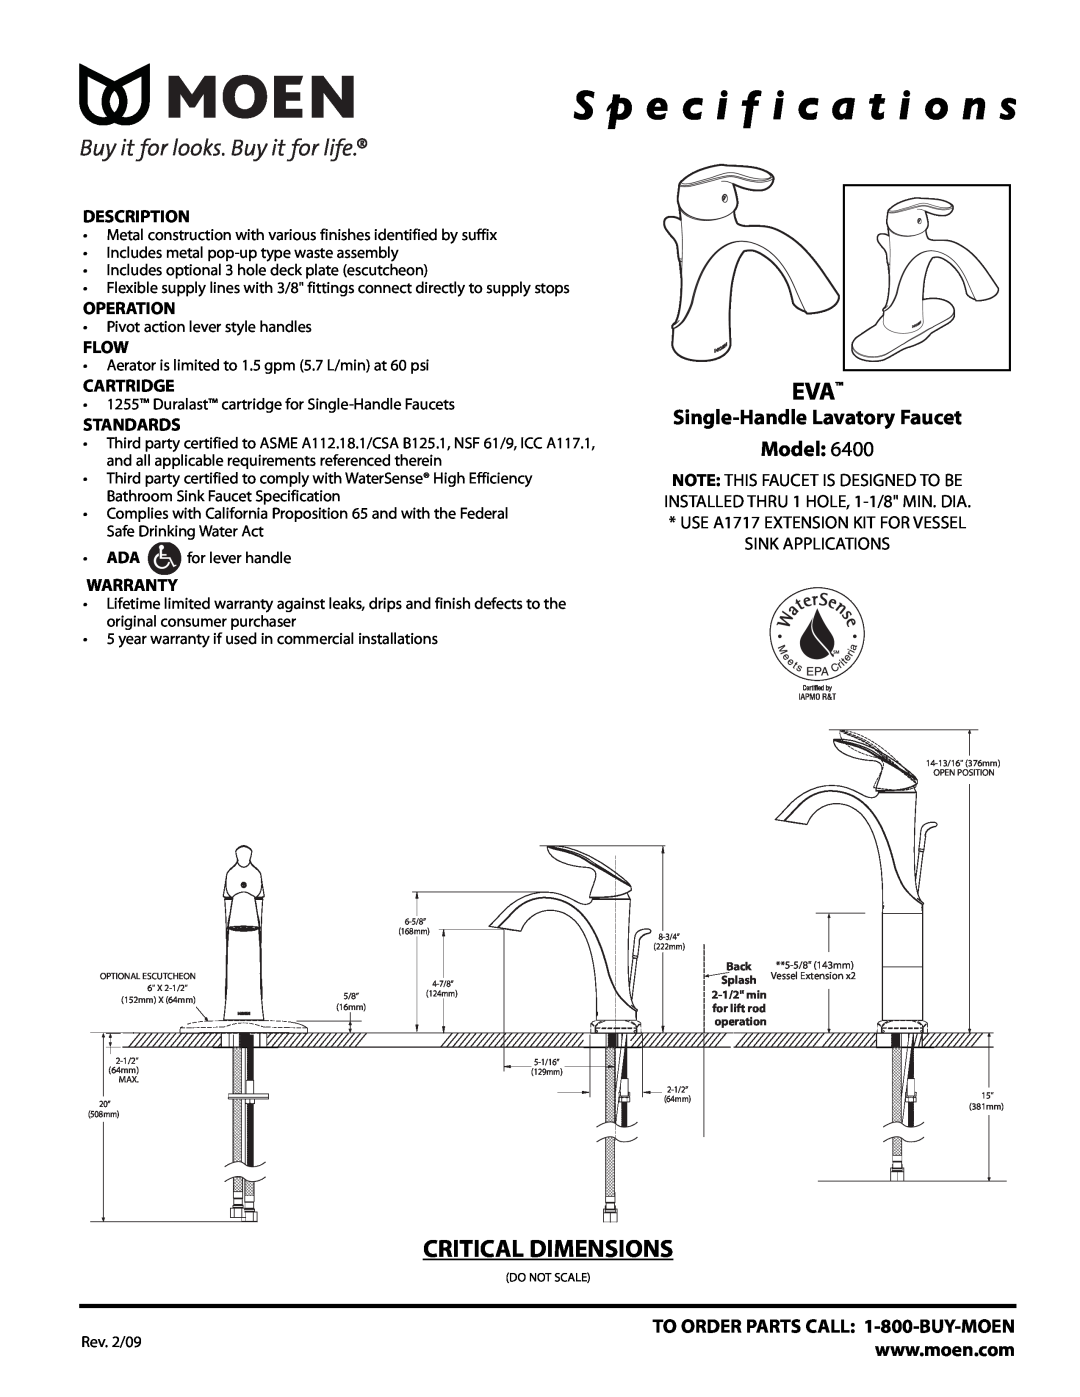 Moen 6400 specifications S p e c i f i c a t i o n s, Critical Dimensions, Model, Single-Handle Lavatory Faucet, Operation 